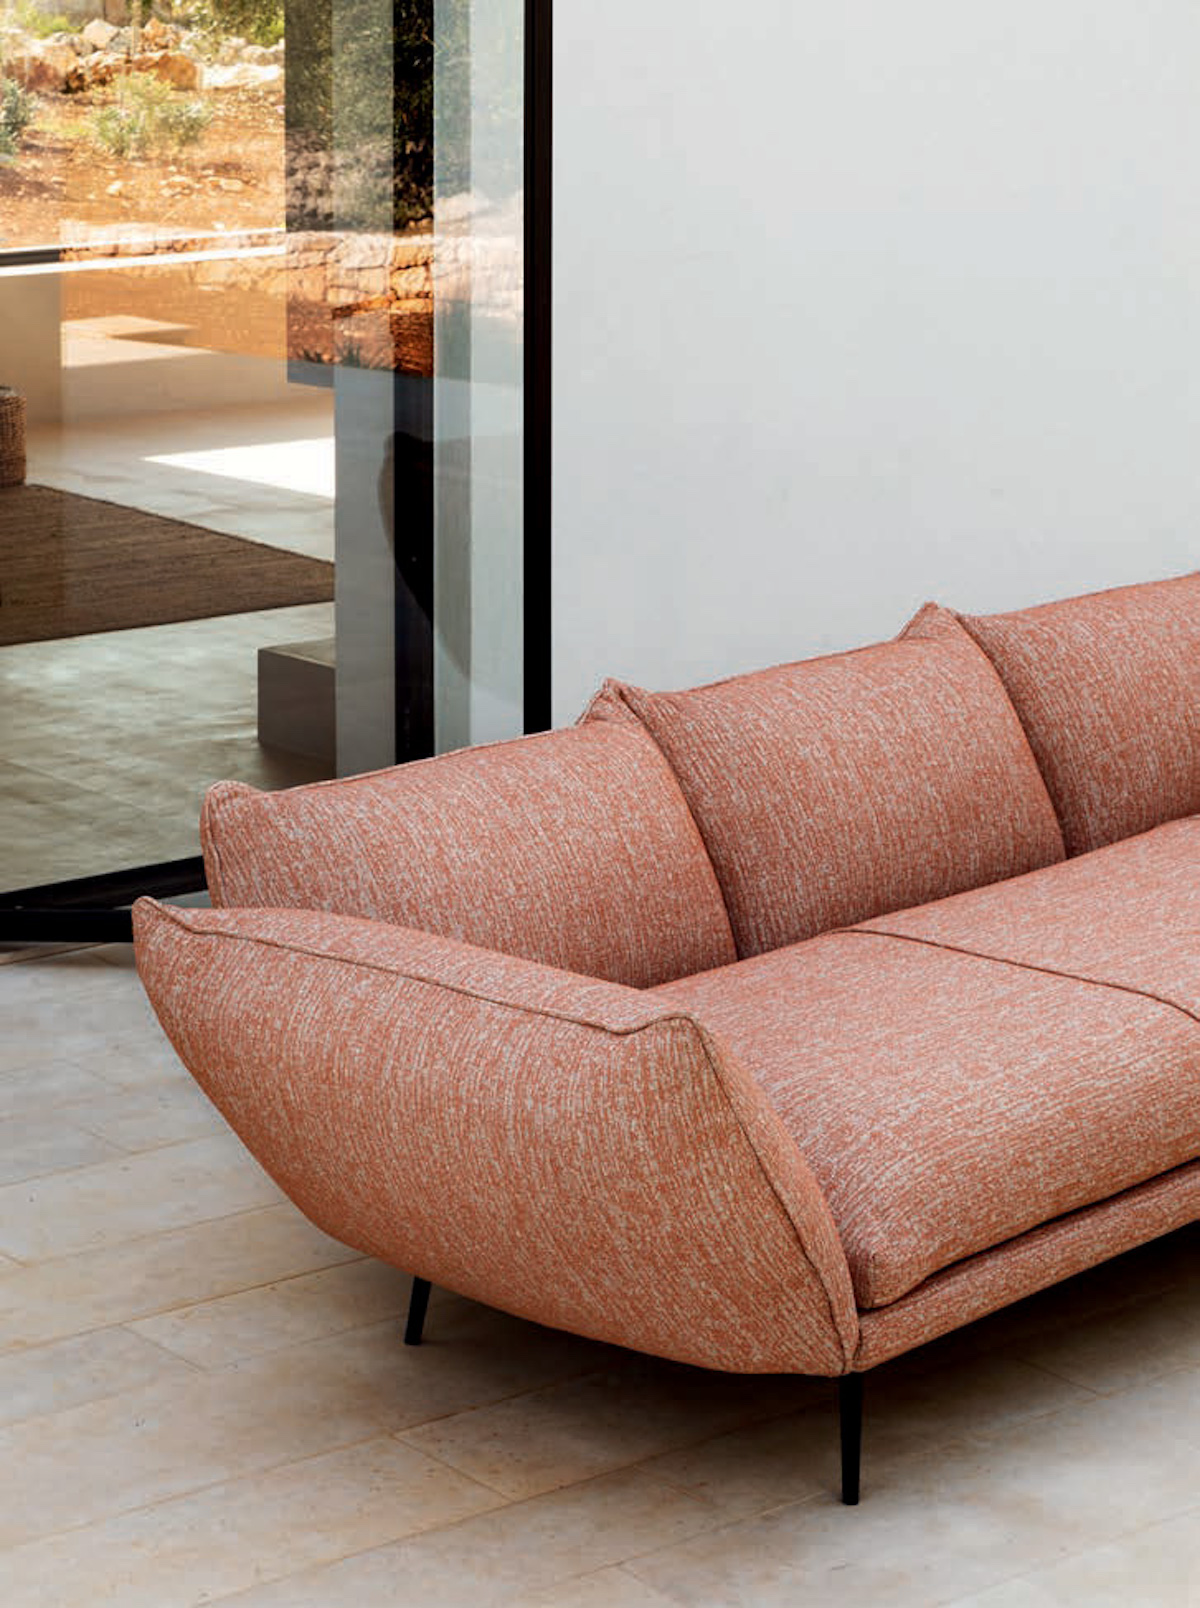 Orange couch, artepatio